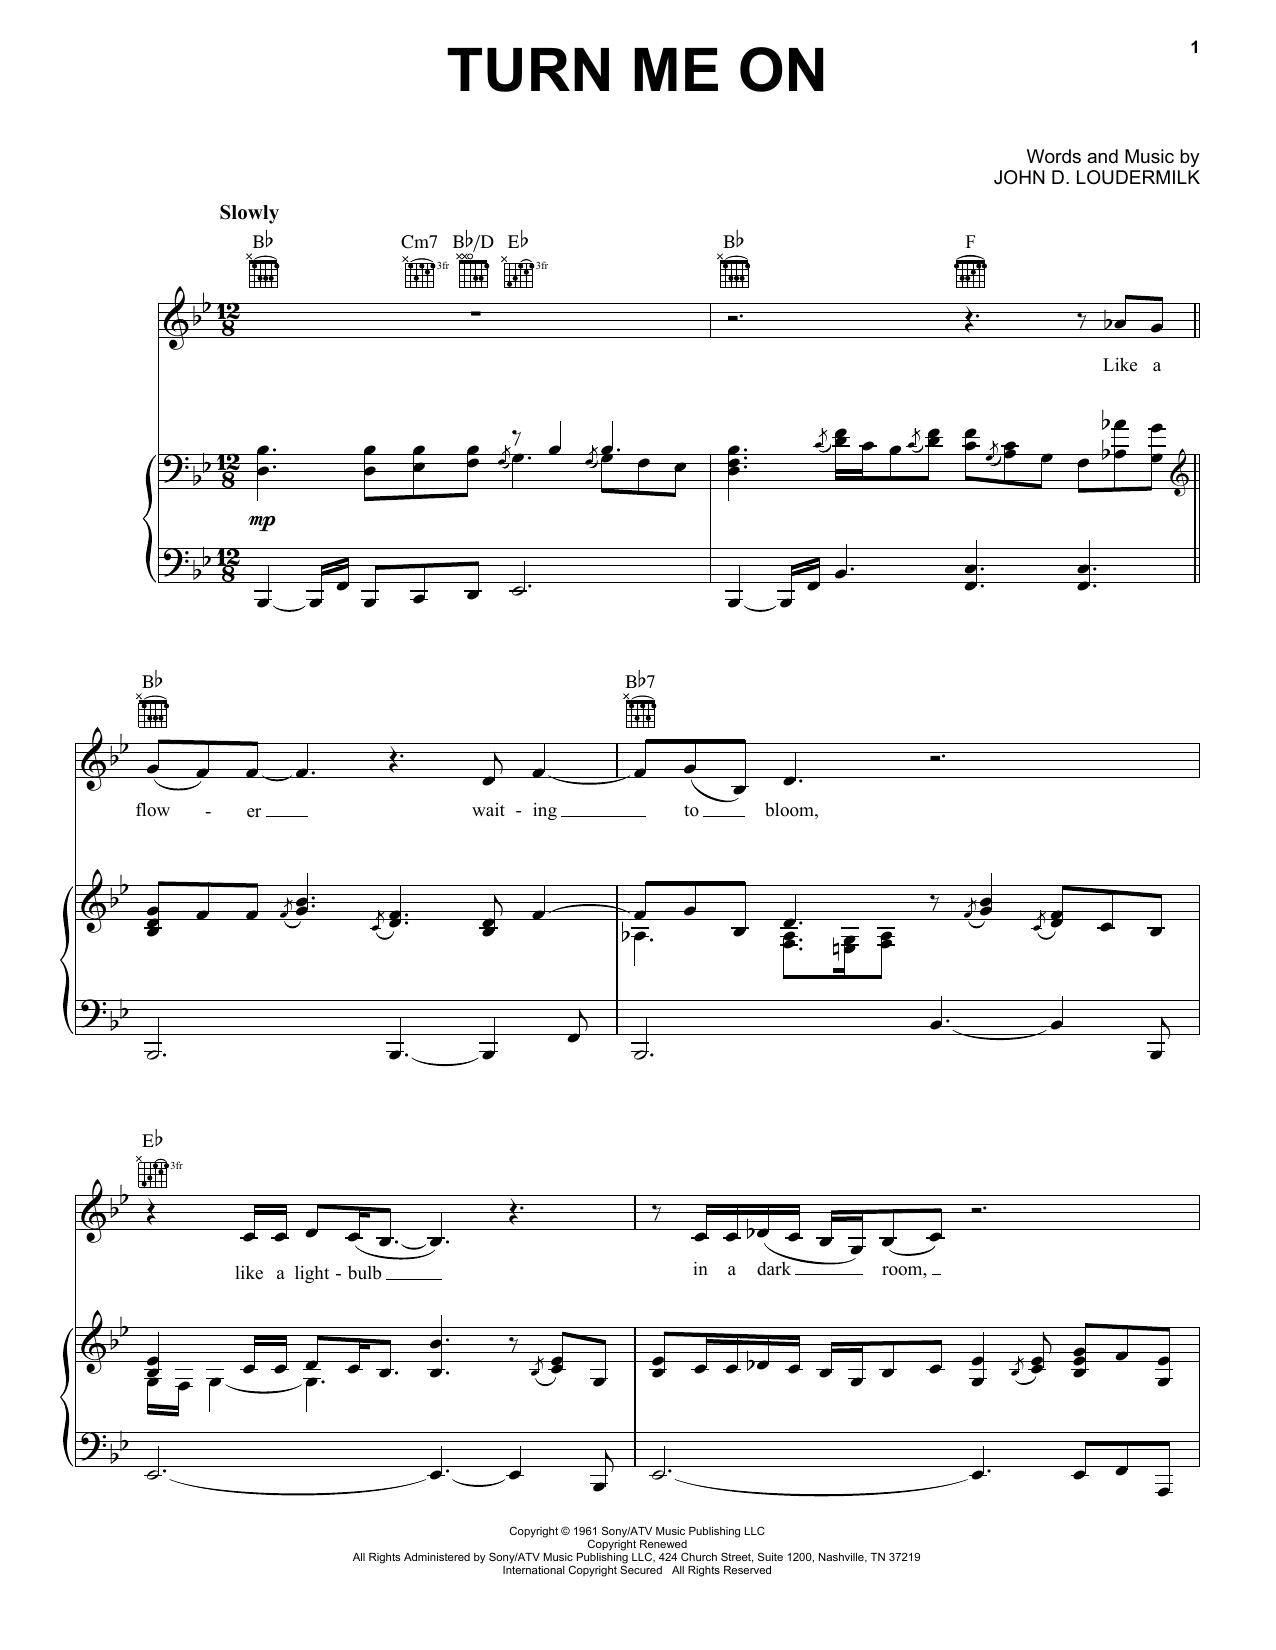 Norah Jones Turn Me On Sheet Music Notes & Chords for Easy Guitar Tab - Download or Print PDF